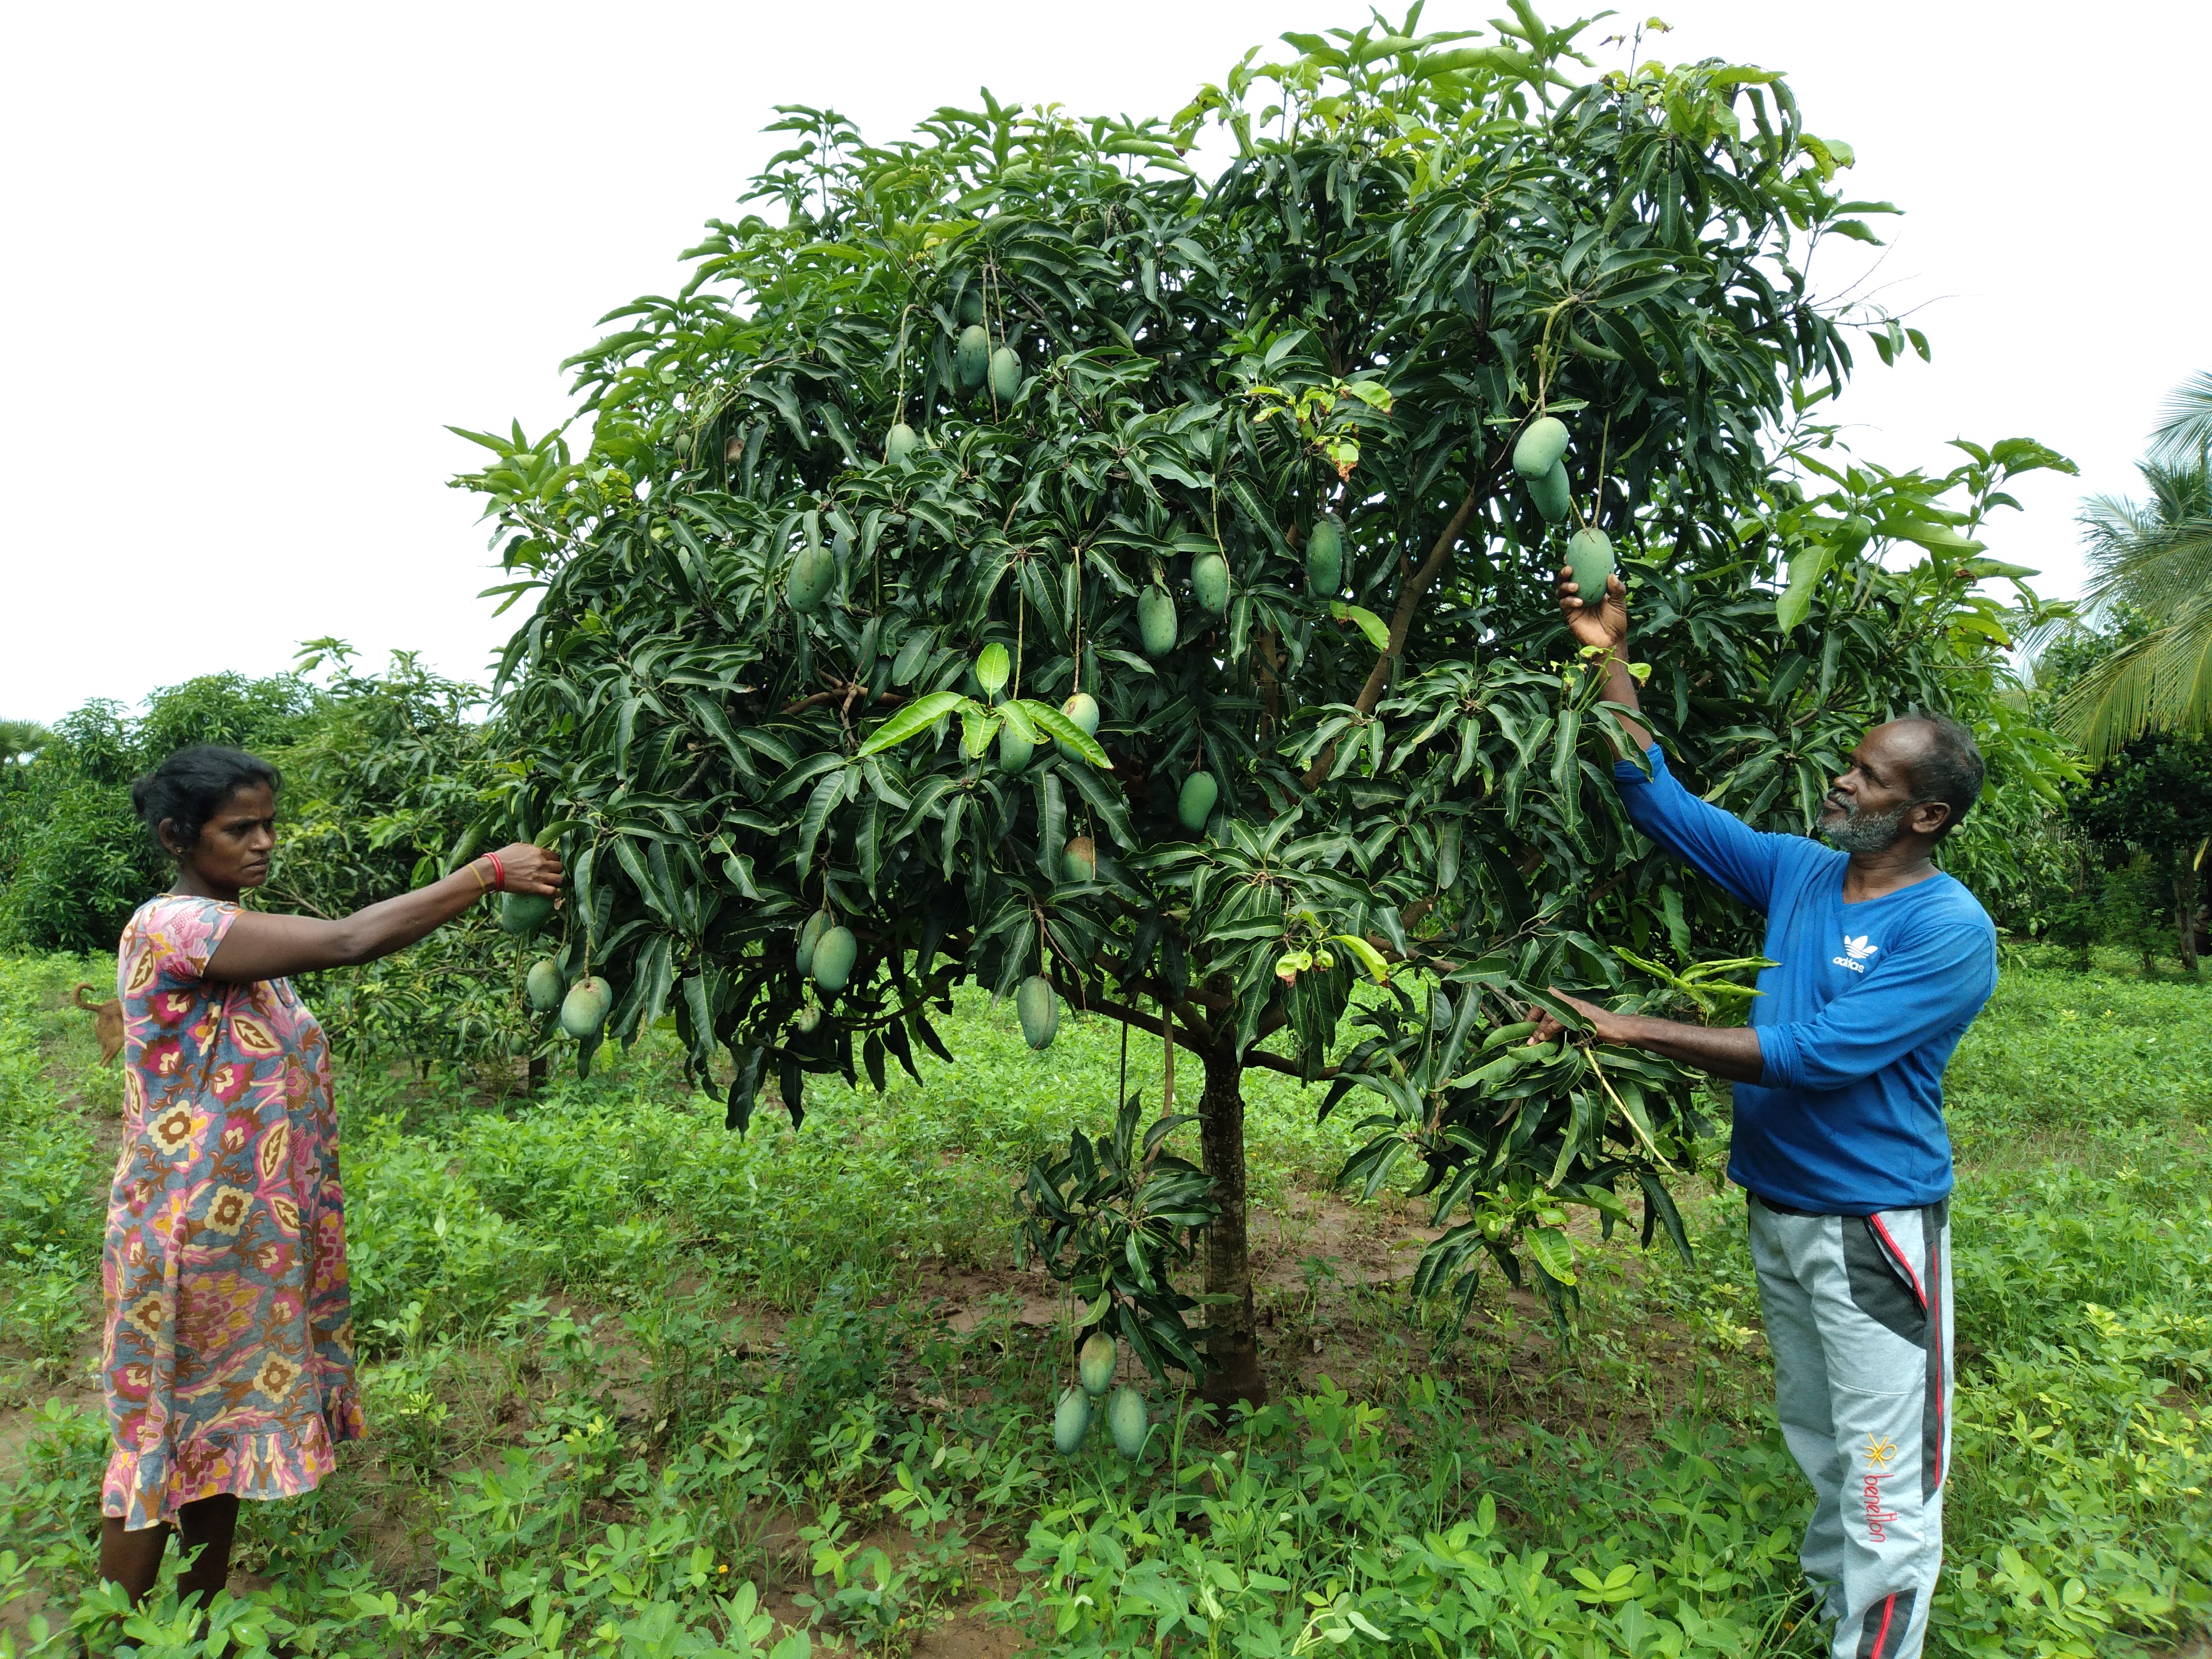 Woman and man plucking mangoes